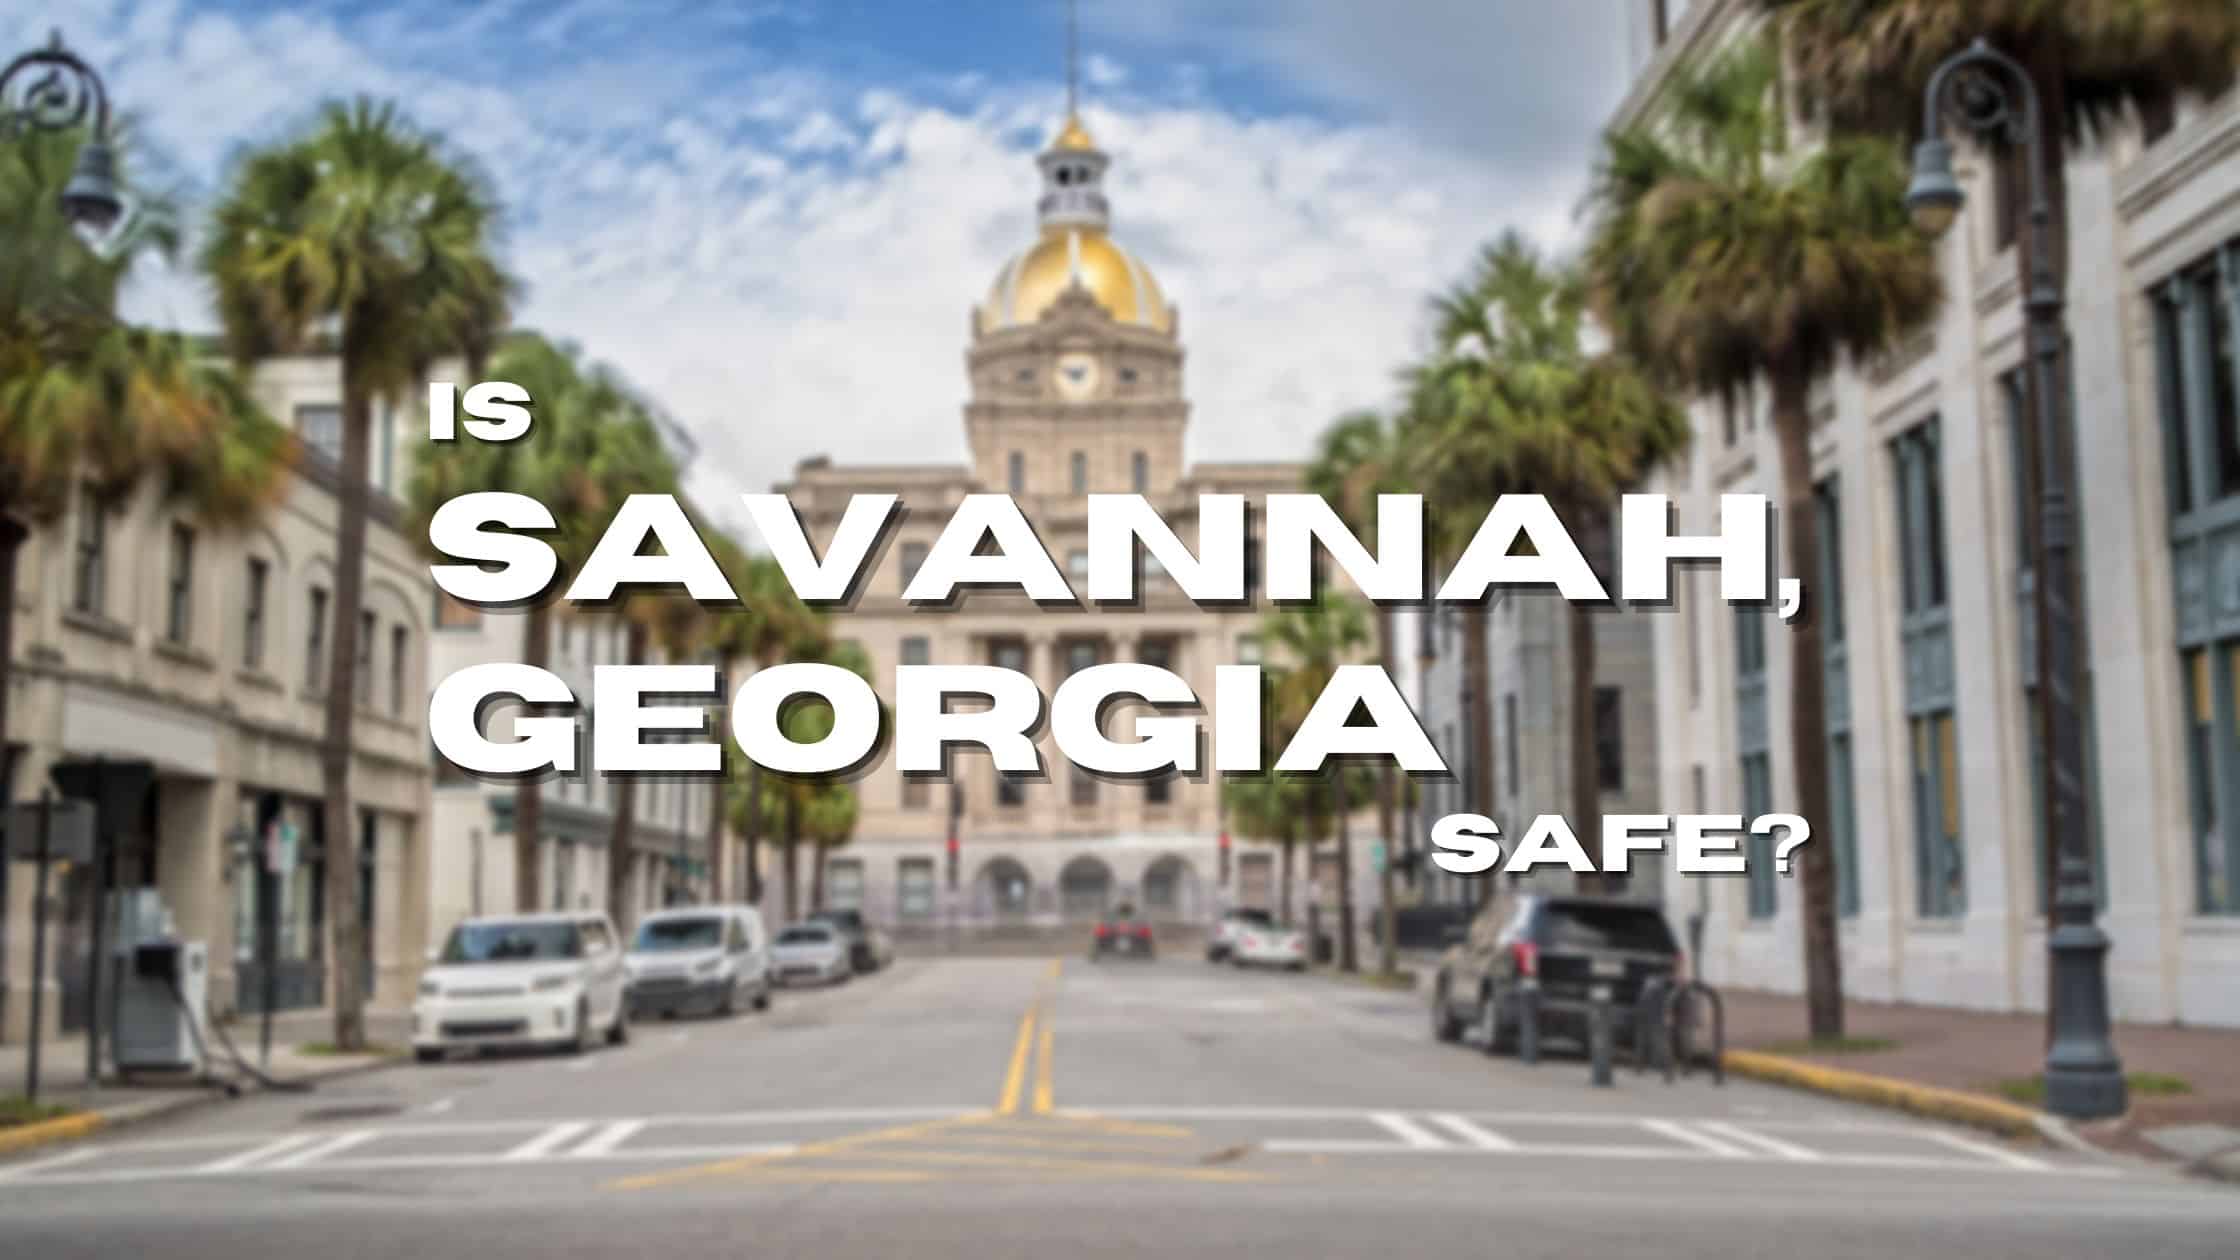 Is Savannah Georgia Safe